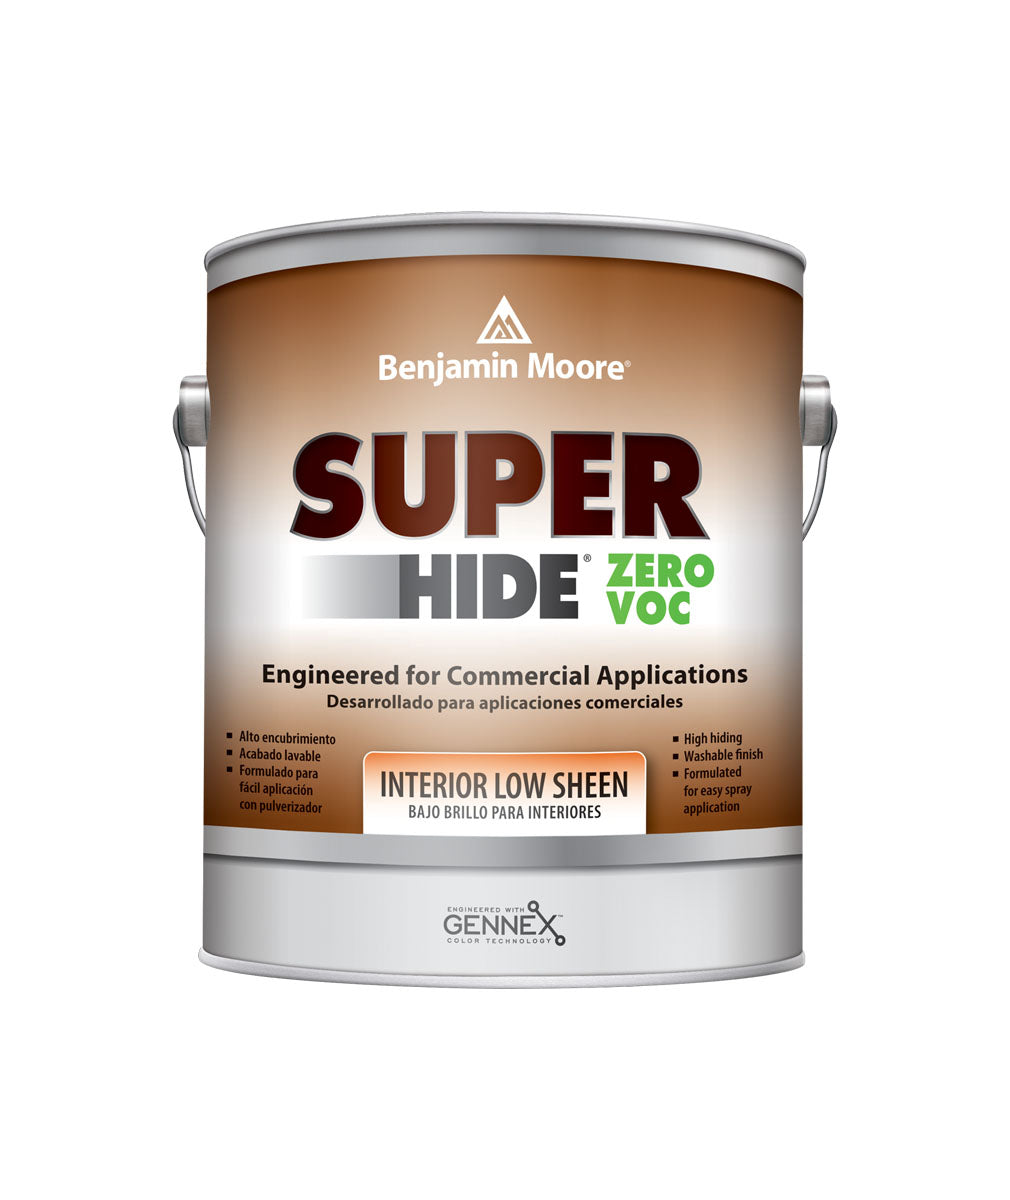 Super Hide Zero Voc Standard Paint Flooring